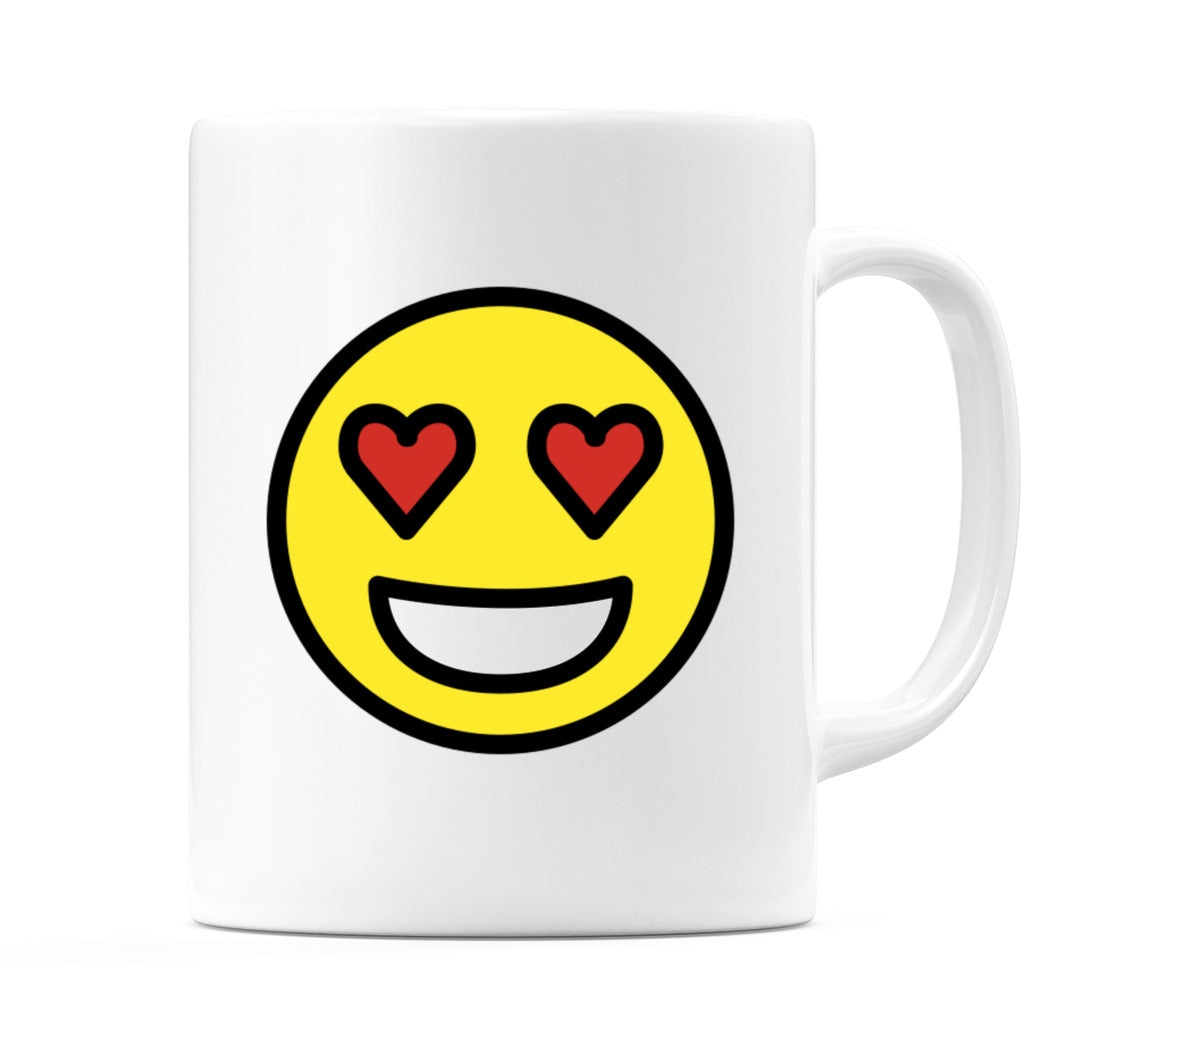 Smiling Face With Heart-Eyes Emoji Mug